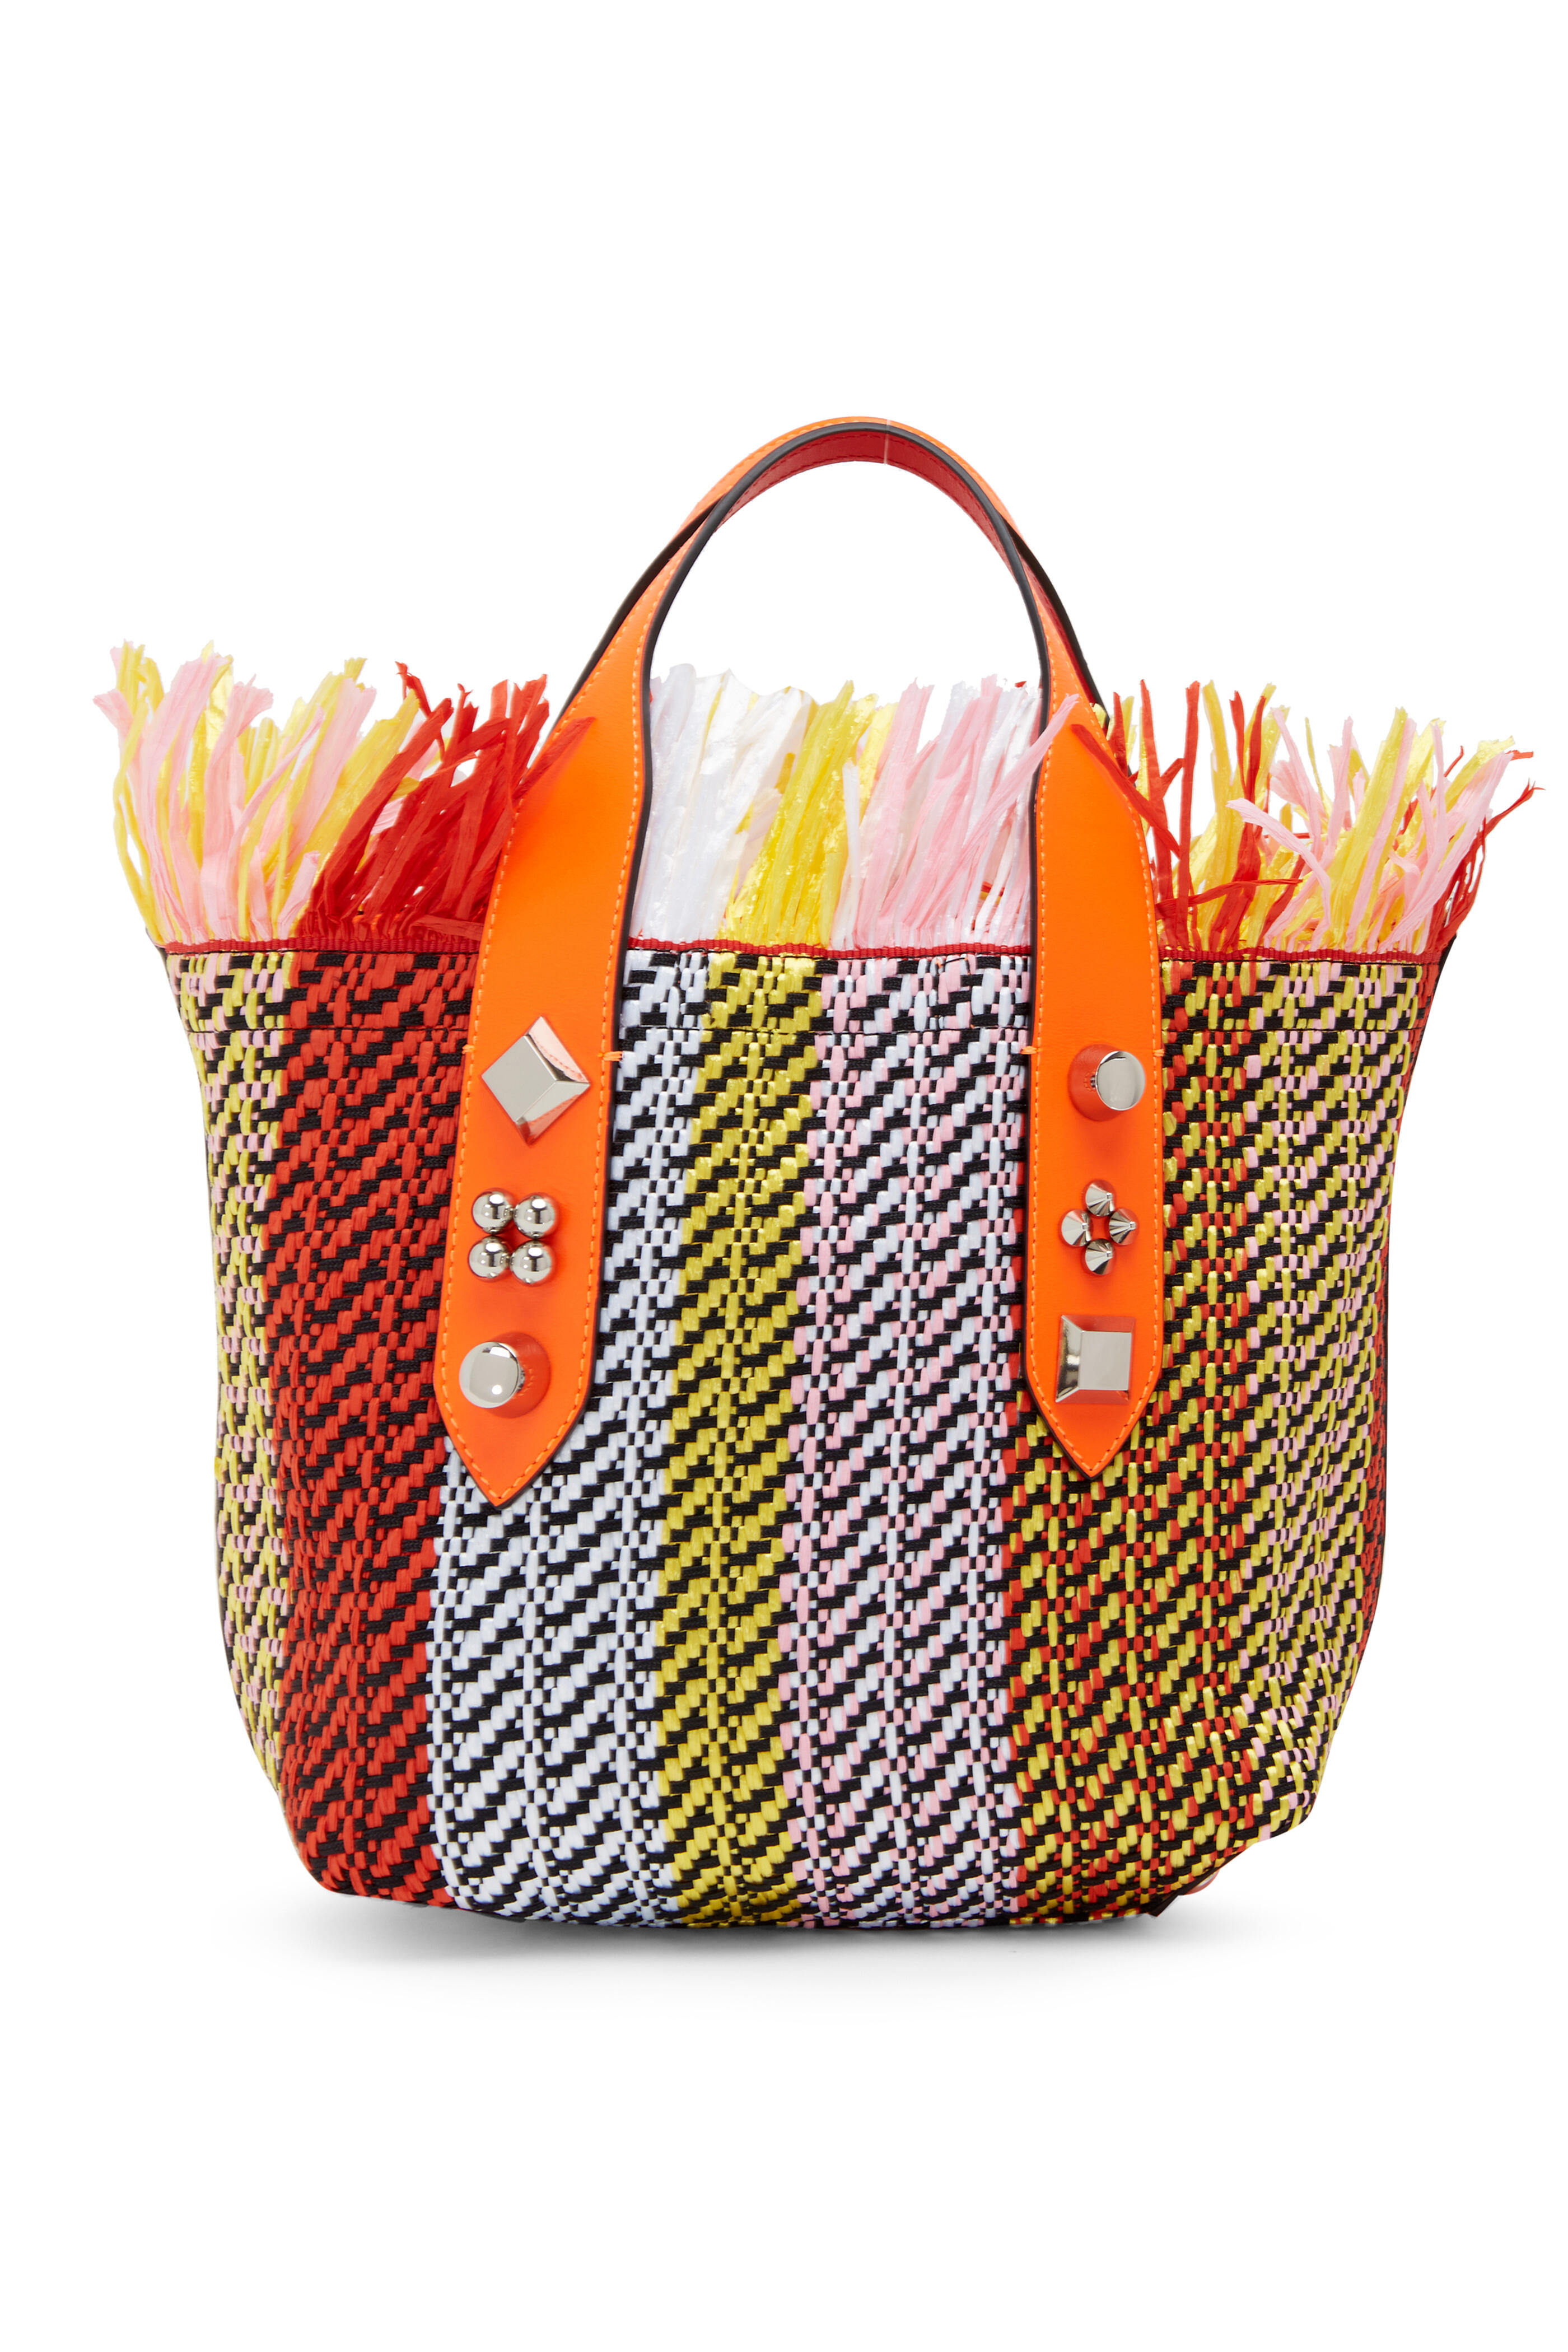 Luxury handbag - Frangibus Christian Louboutin small tote bag in